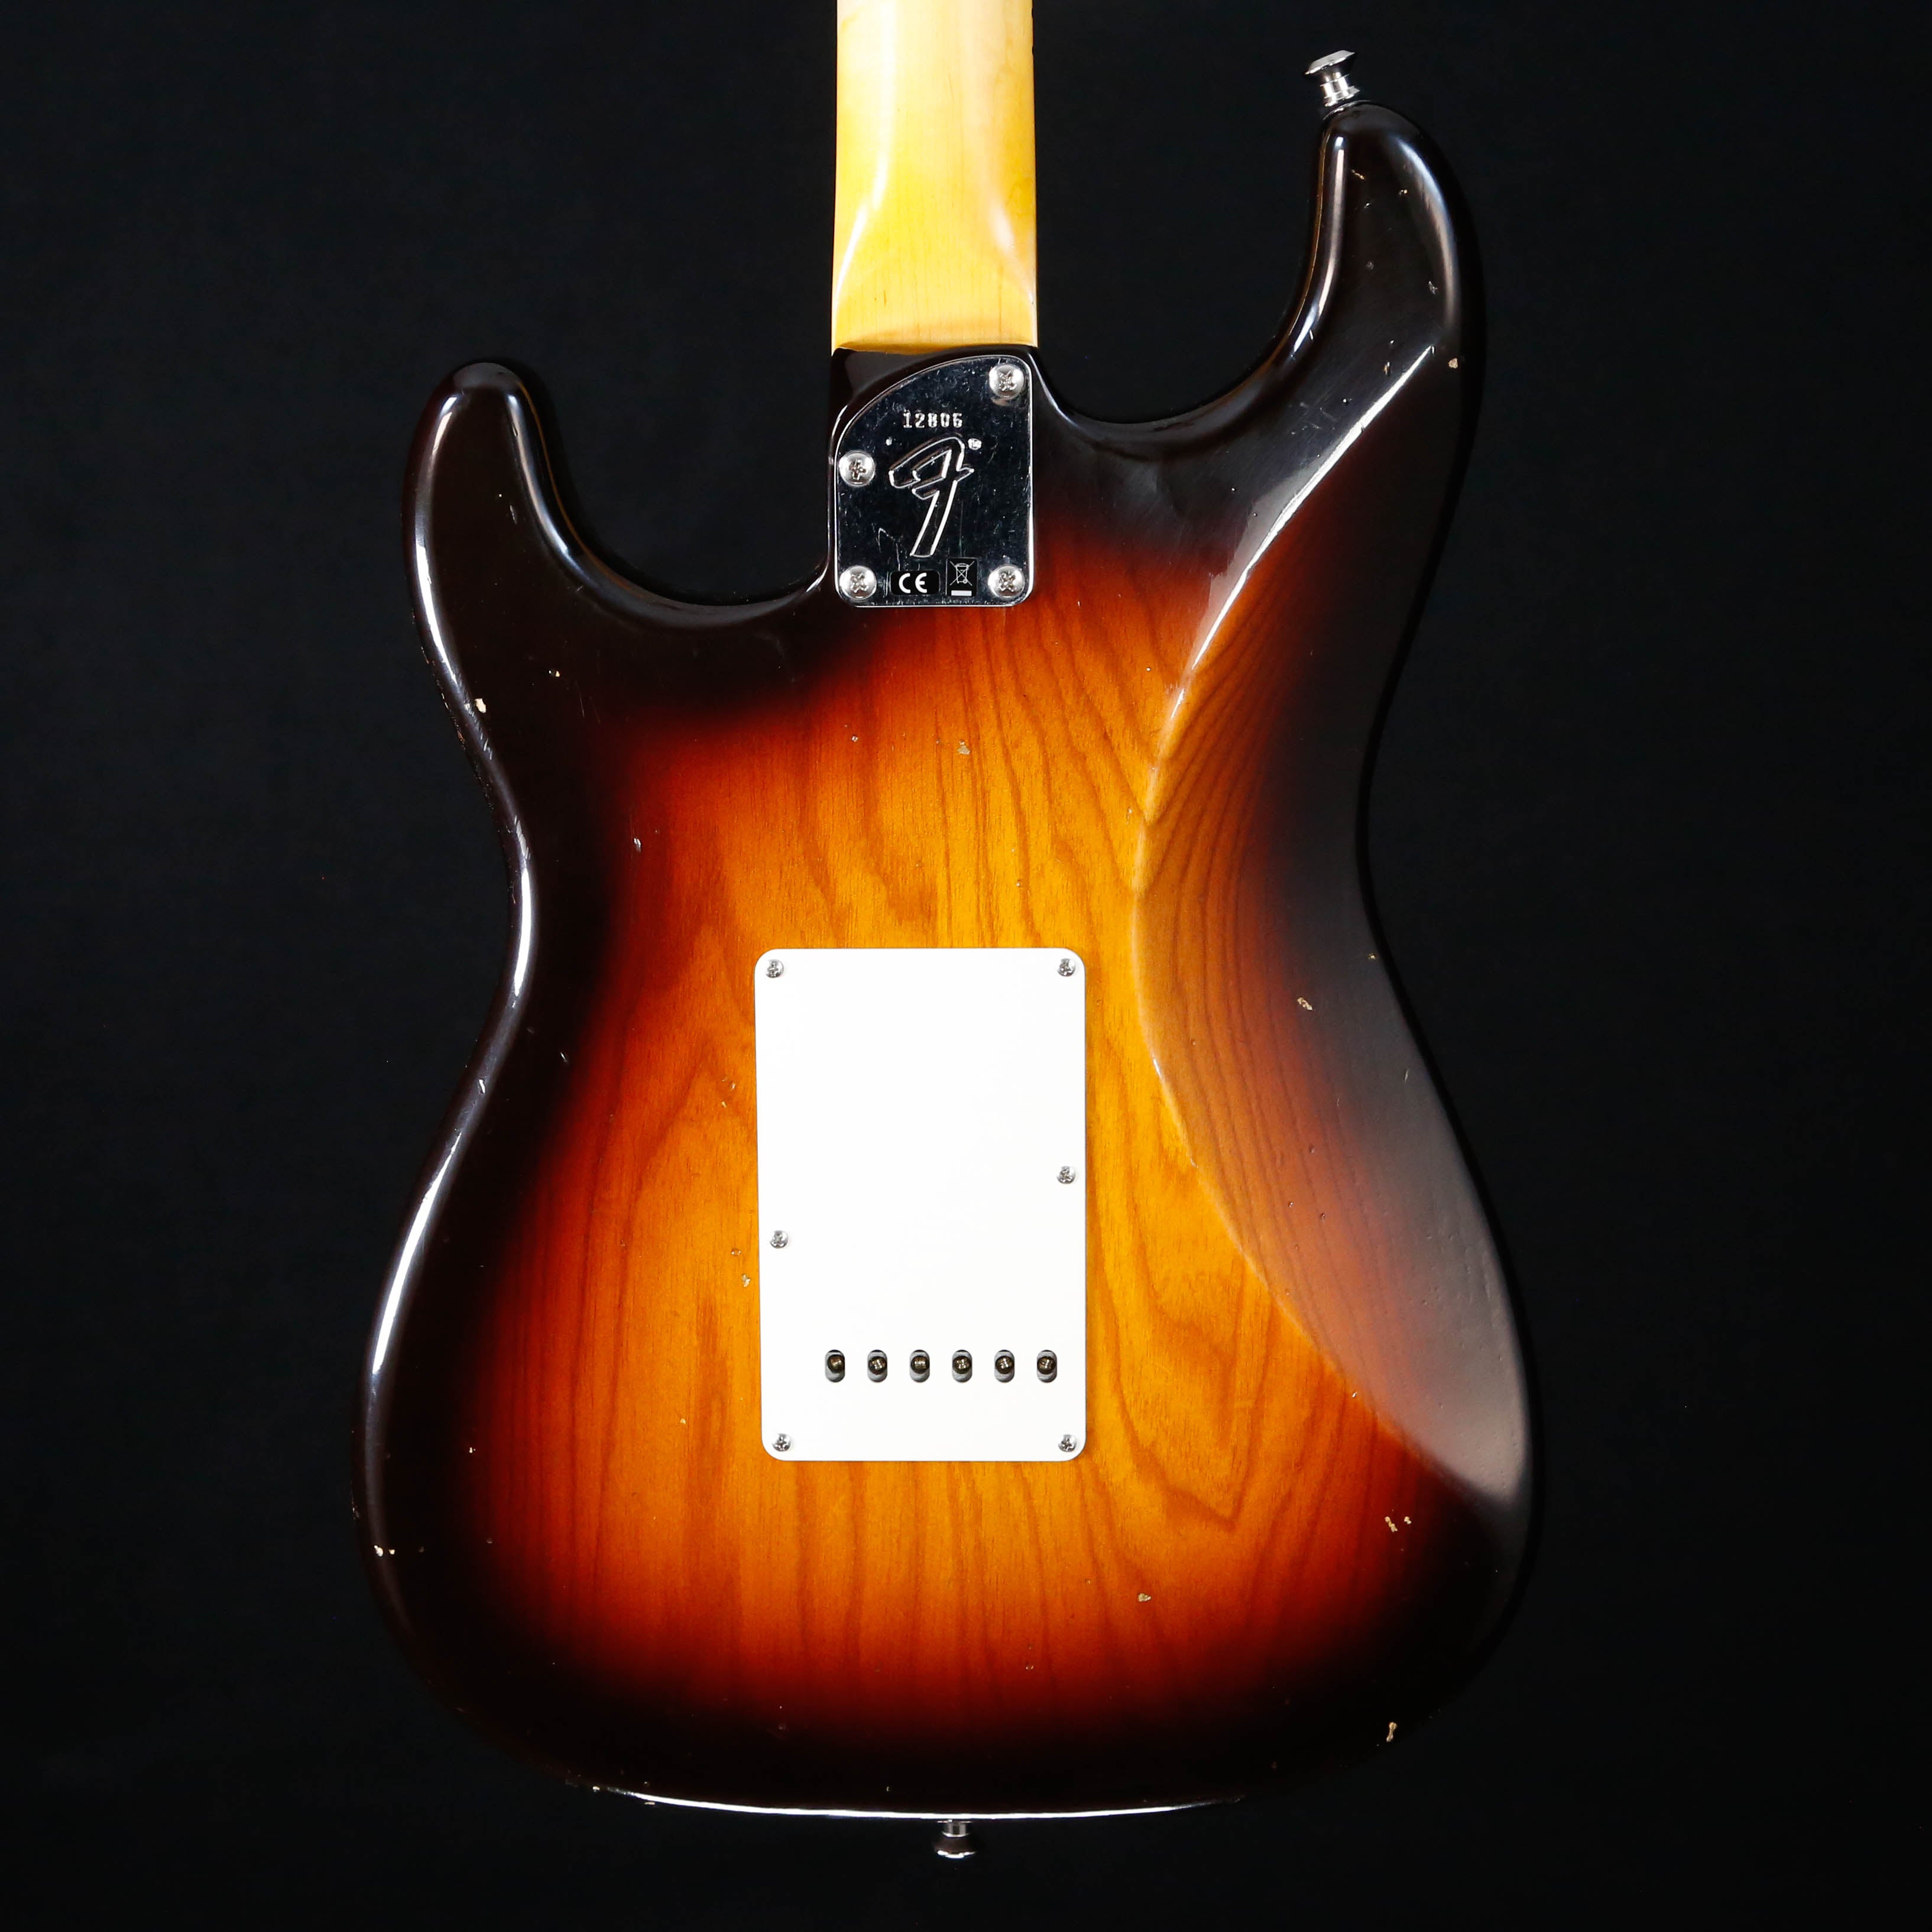 Fender Custom Shop Postmodern Stratocaster Journeyman Sunburst 806 7lbs 7.6oz